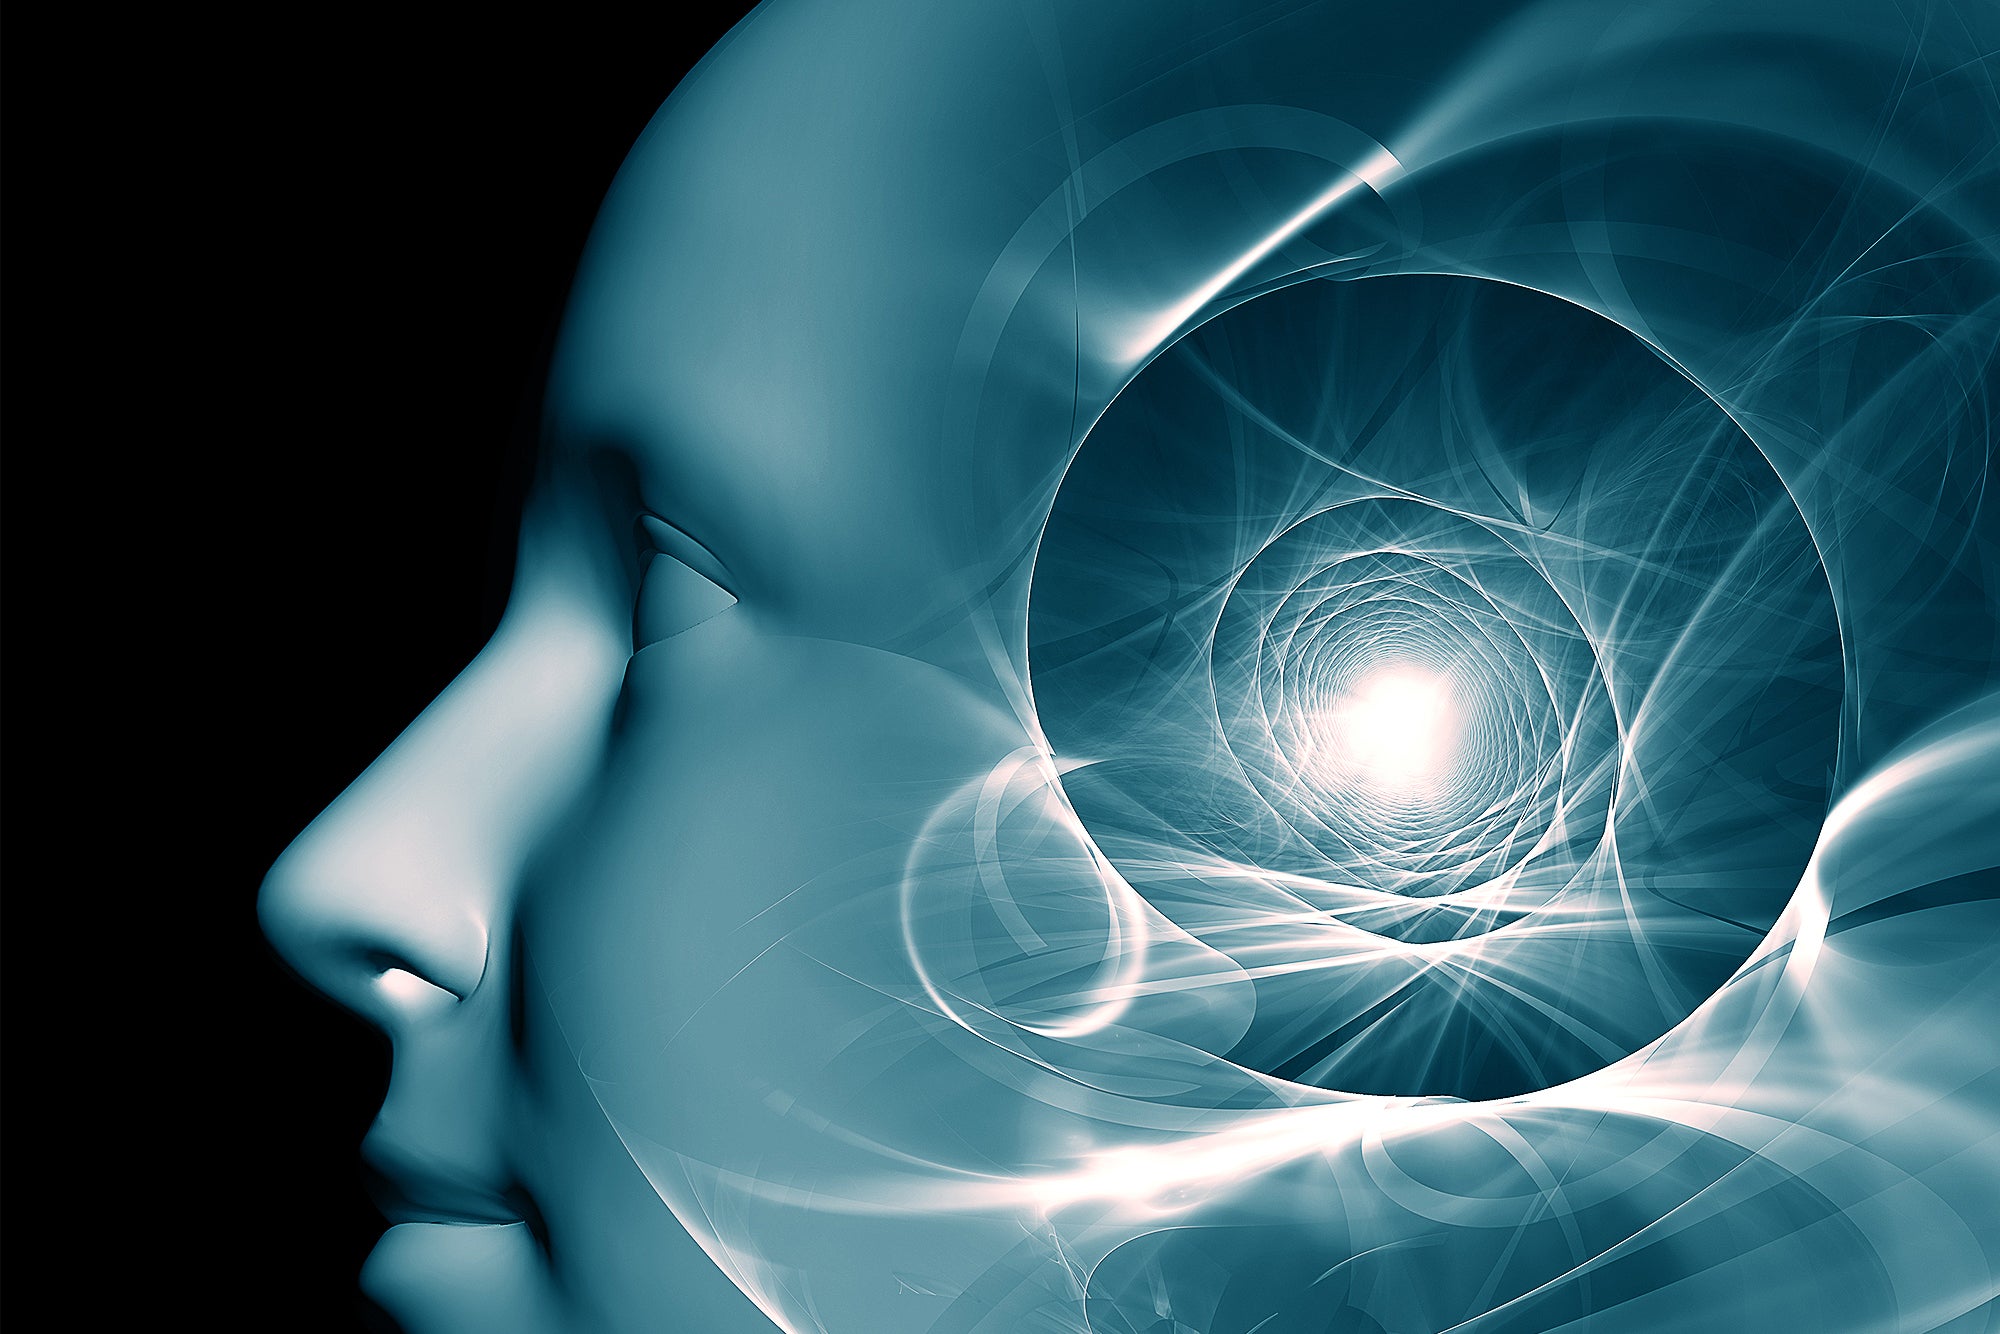 Understanding Consciousness Goes Beyond Exploring Brain Chemistry